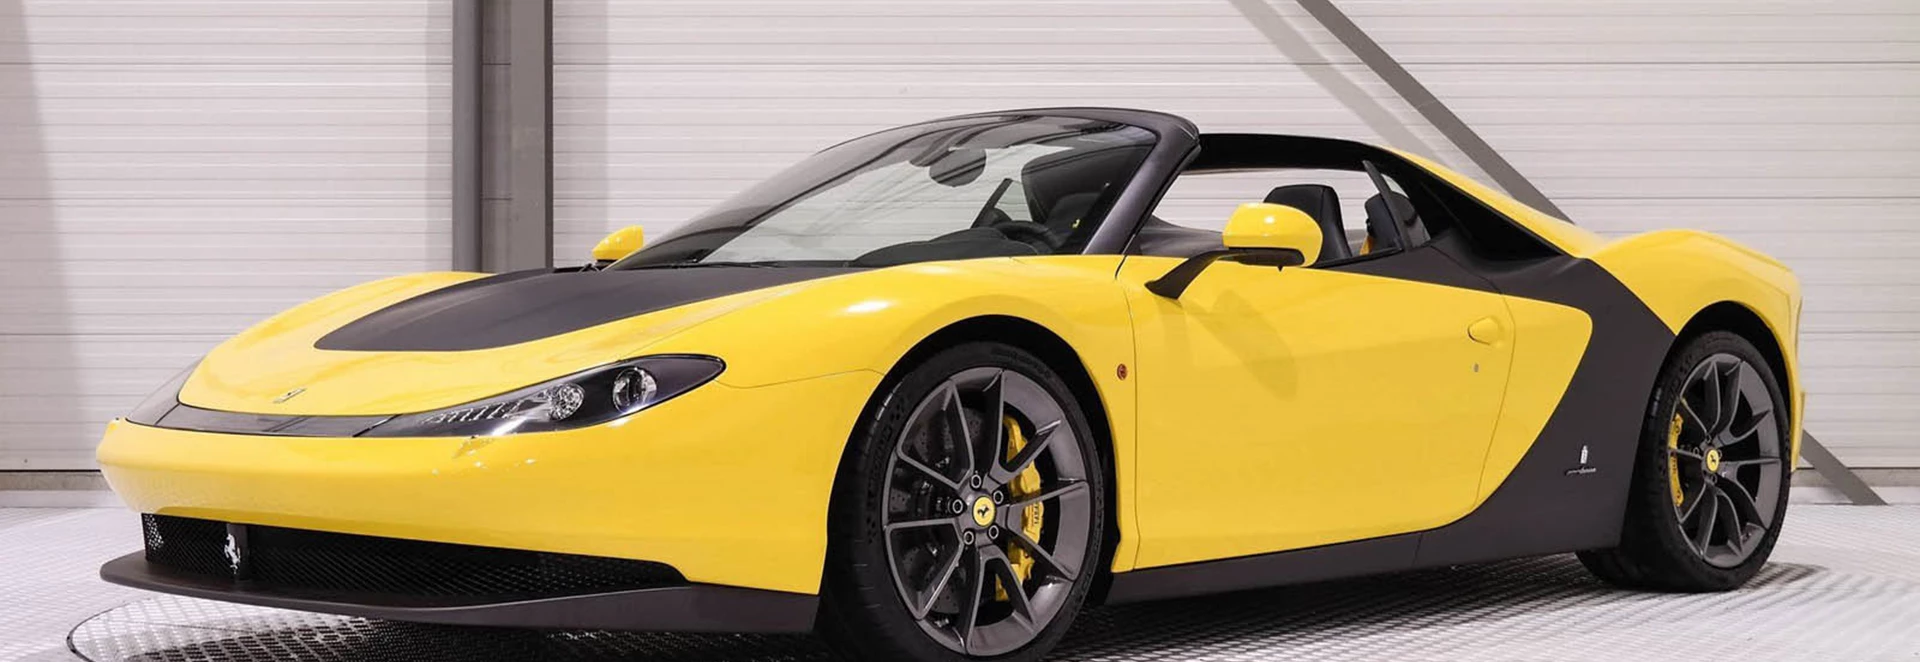 Rare Ferrari Sergio Goes on the Market for £3.8 Million 